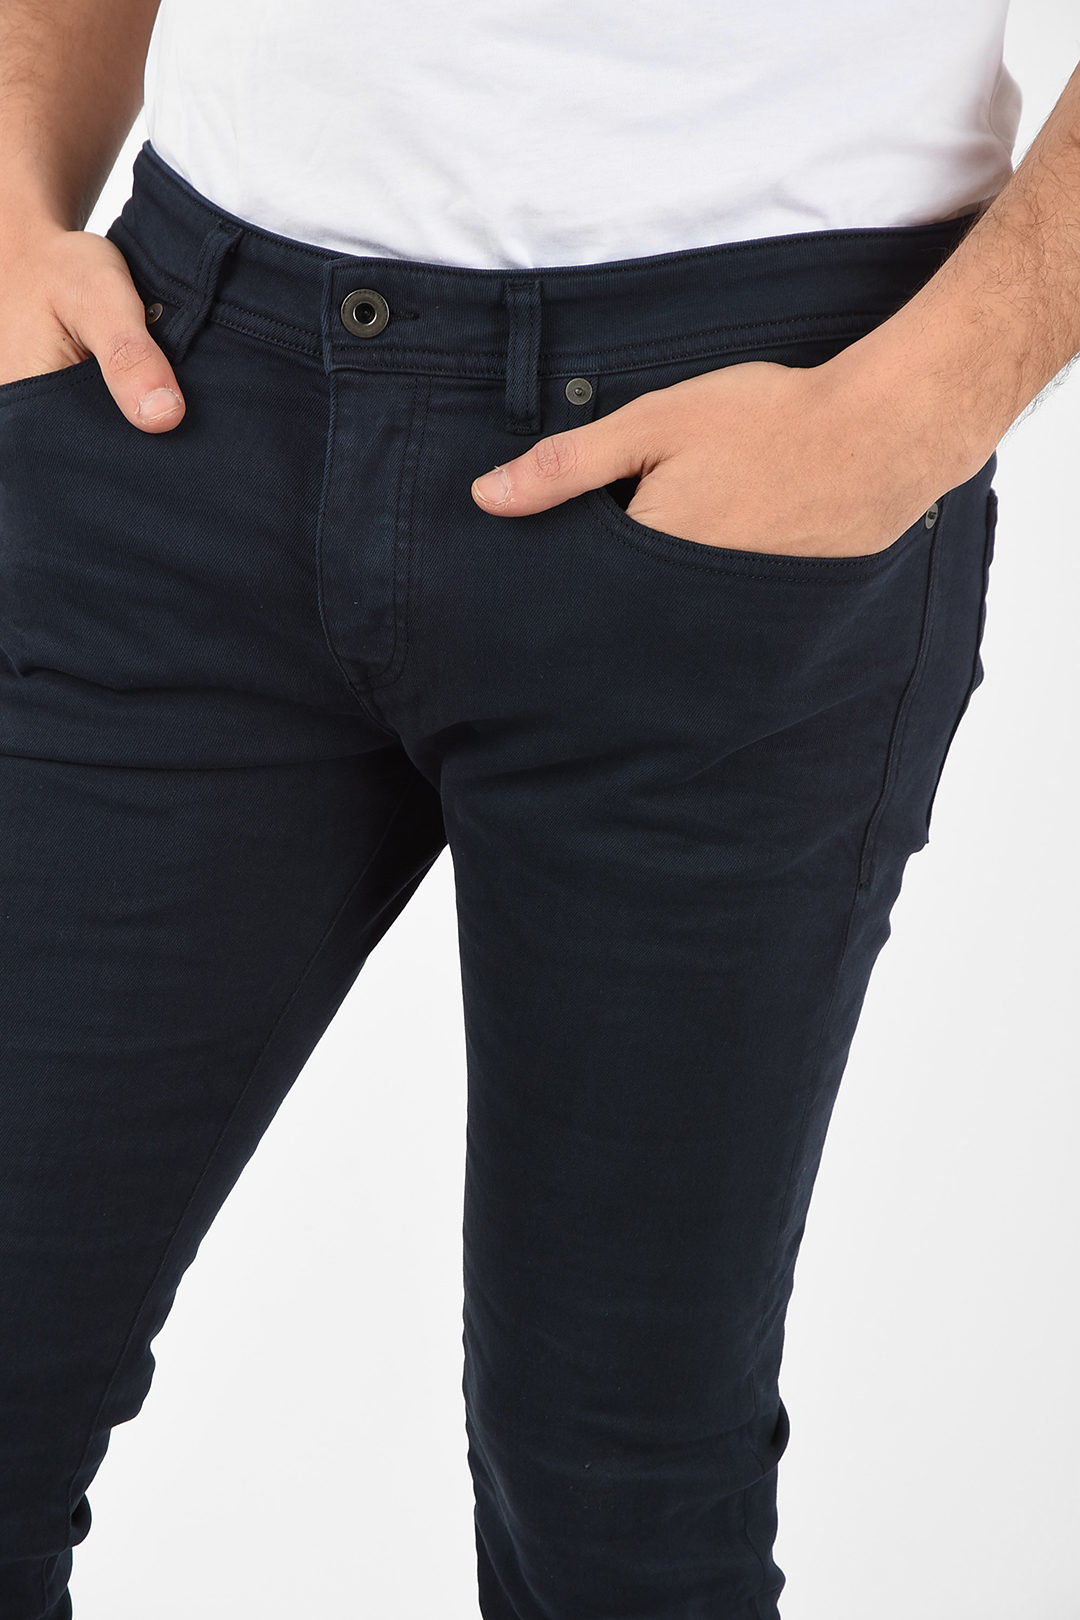 BLACK GOLD 16cm Skinny Fit TYPE-2614 Jeans